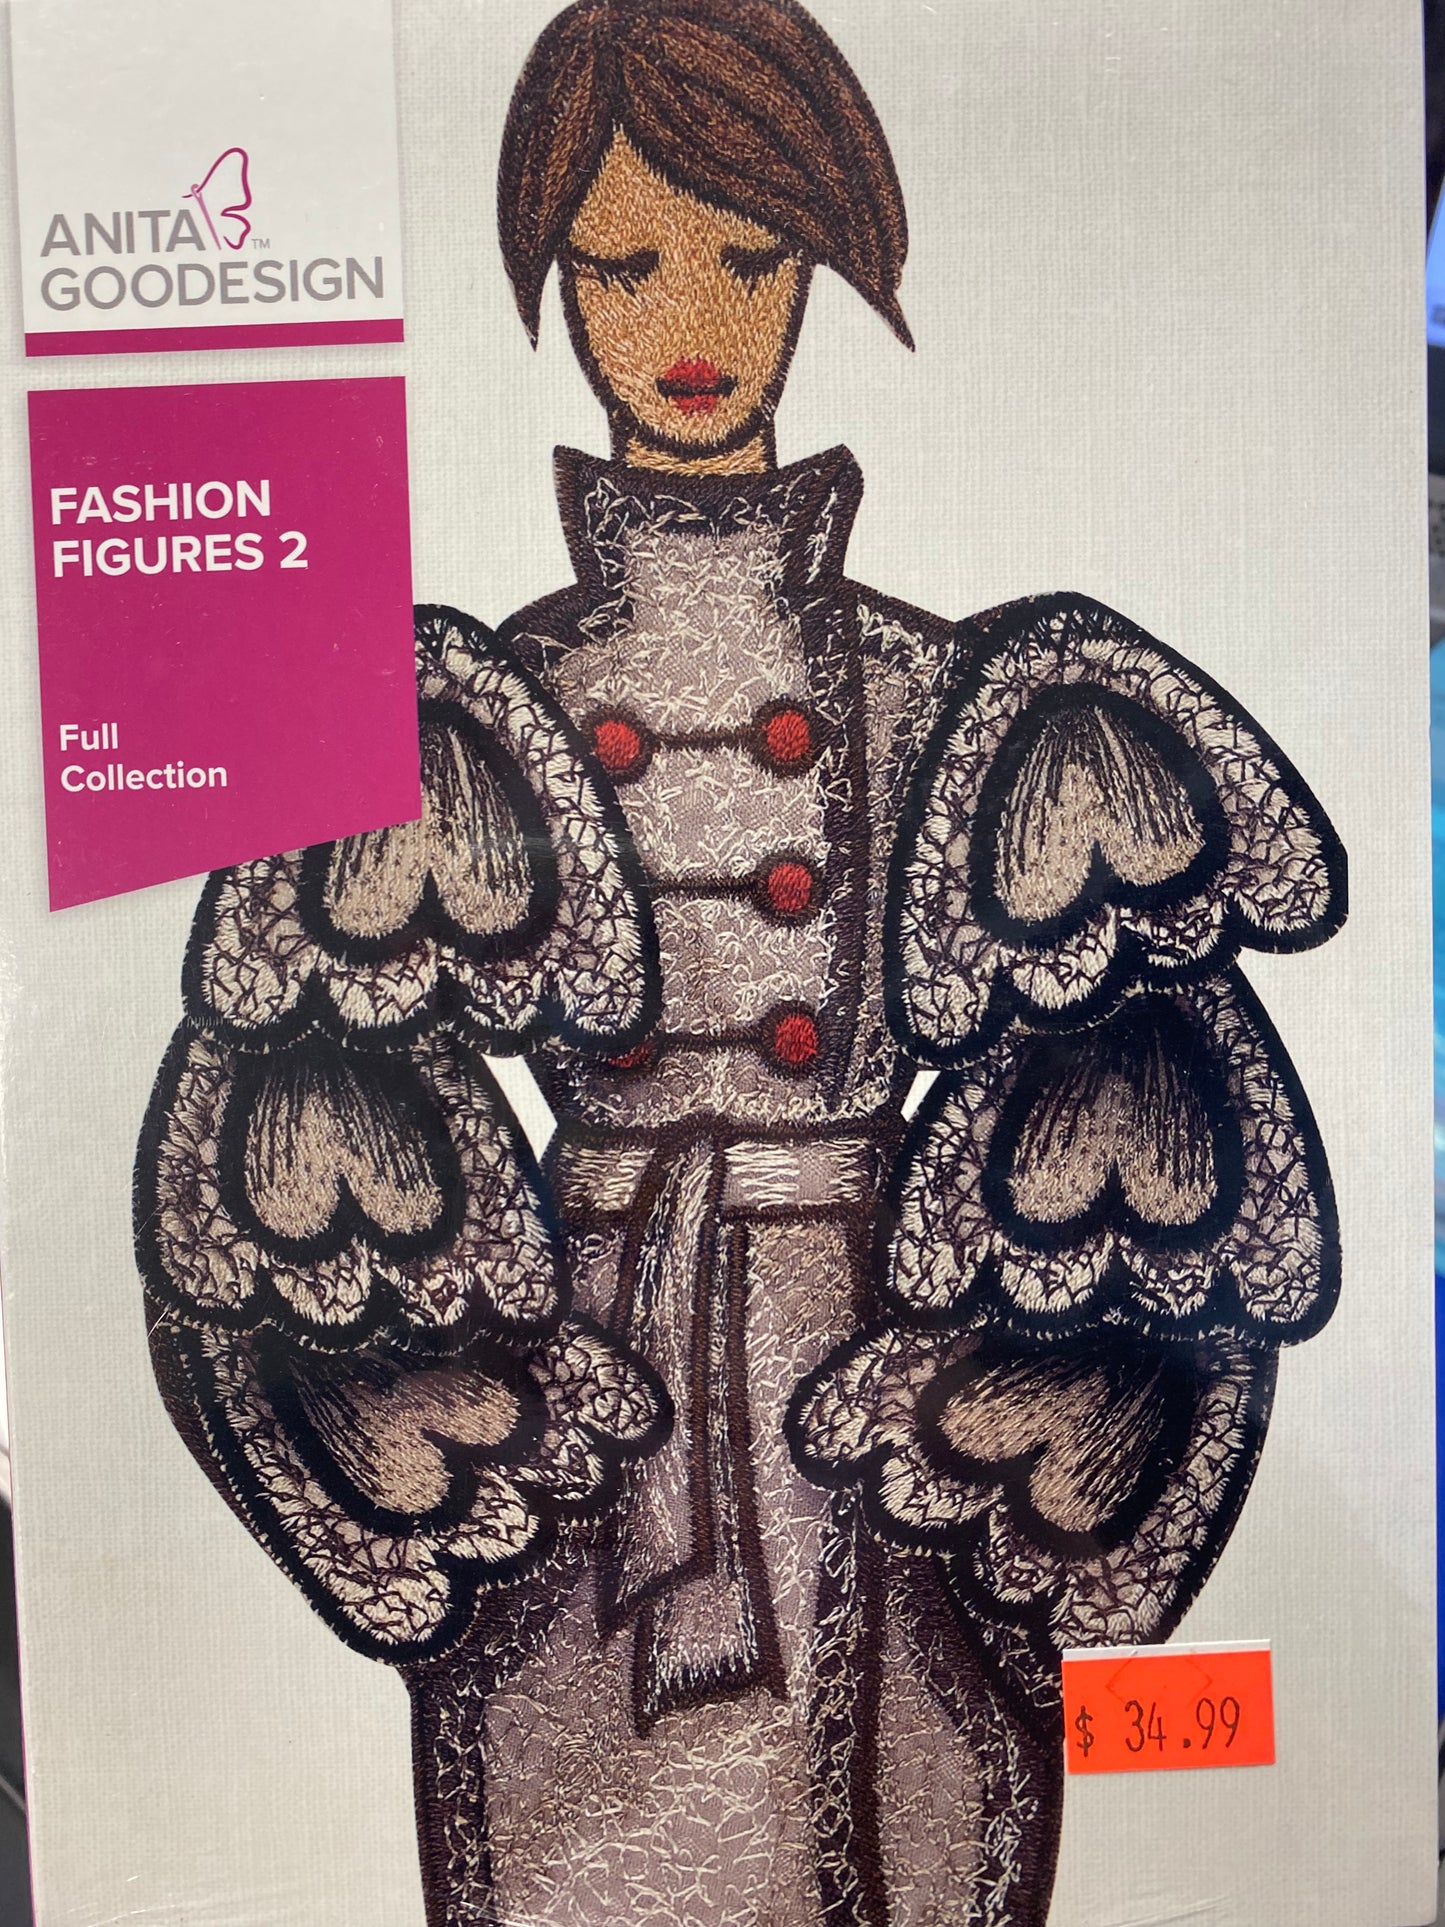 Fashion Figures 2 by Anita Goodesign